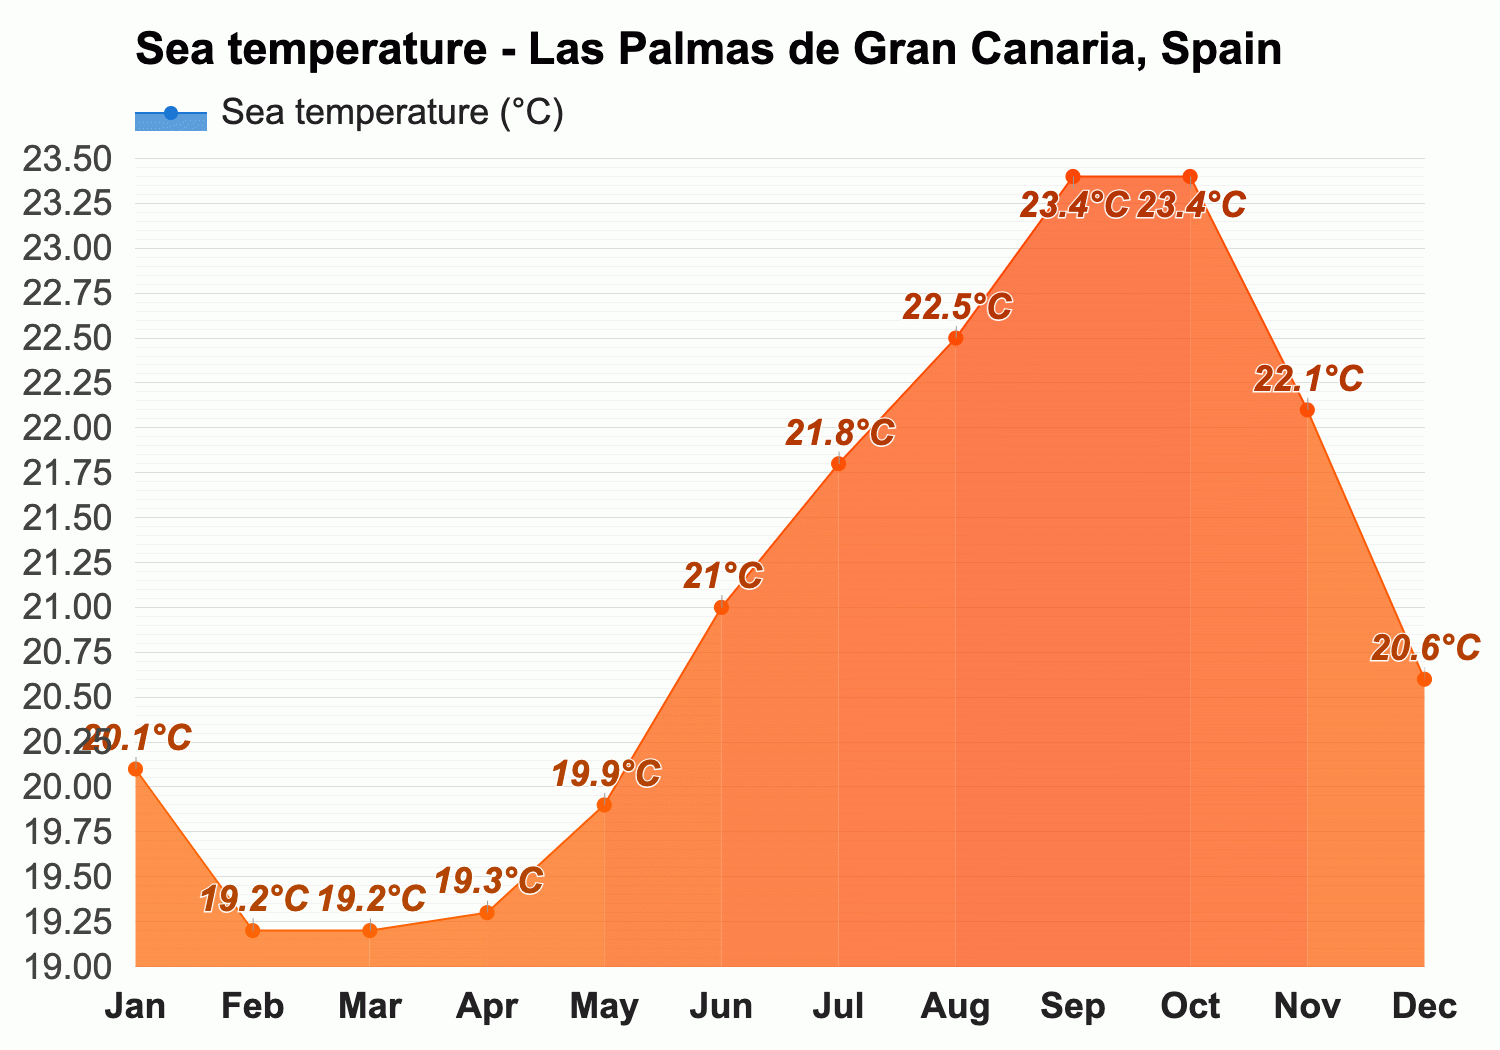 Las Palmas de Gran Canaria, Spain - December weather forecast and climate  information | Weather Atlas